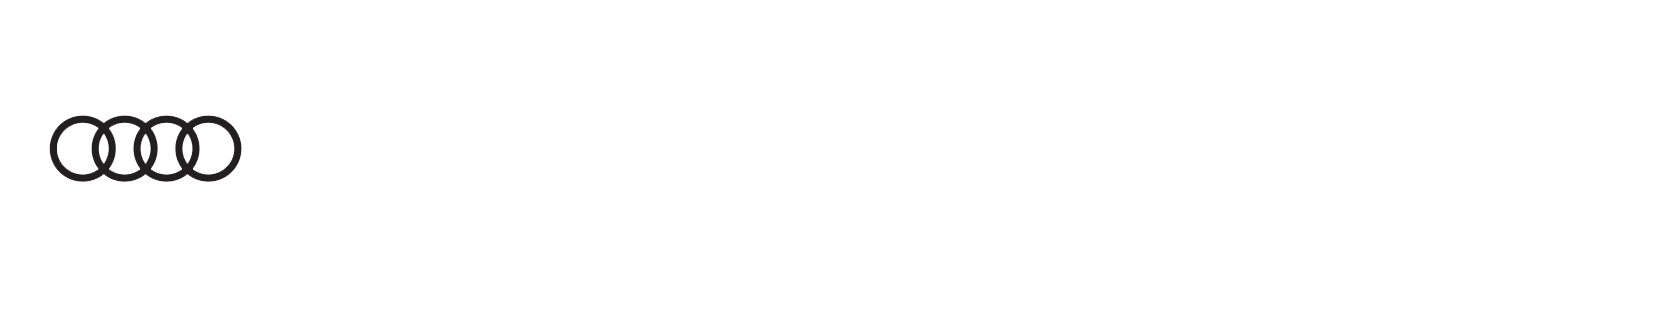 Logo AUDI